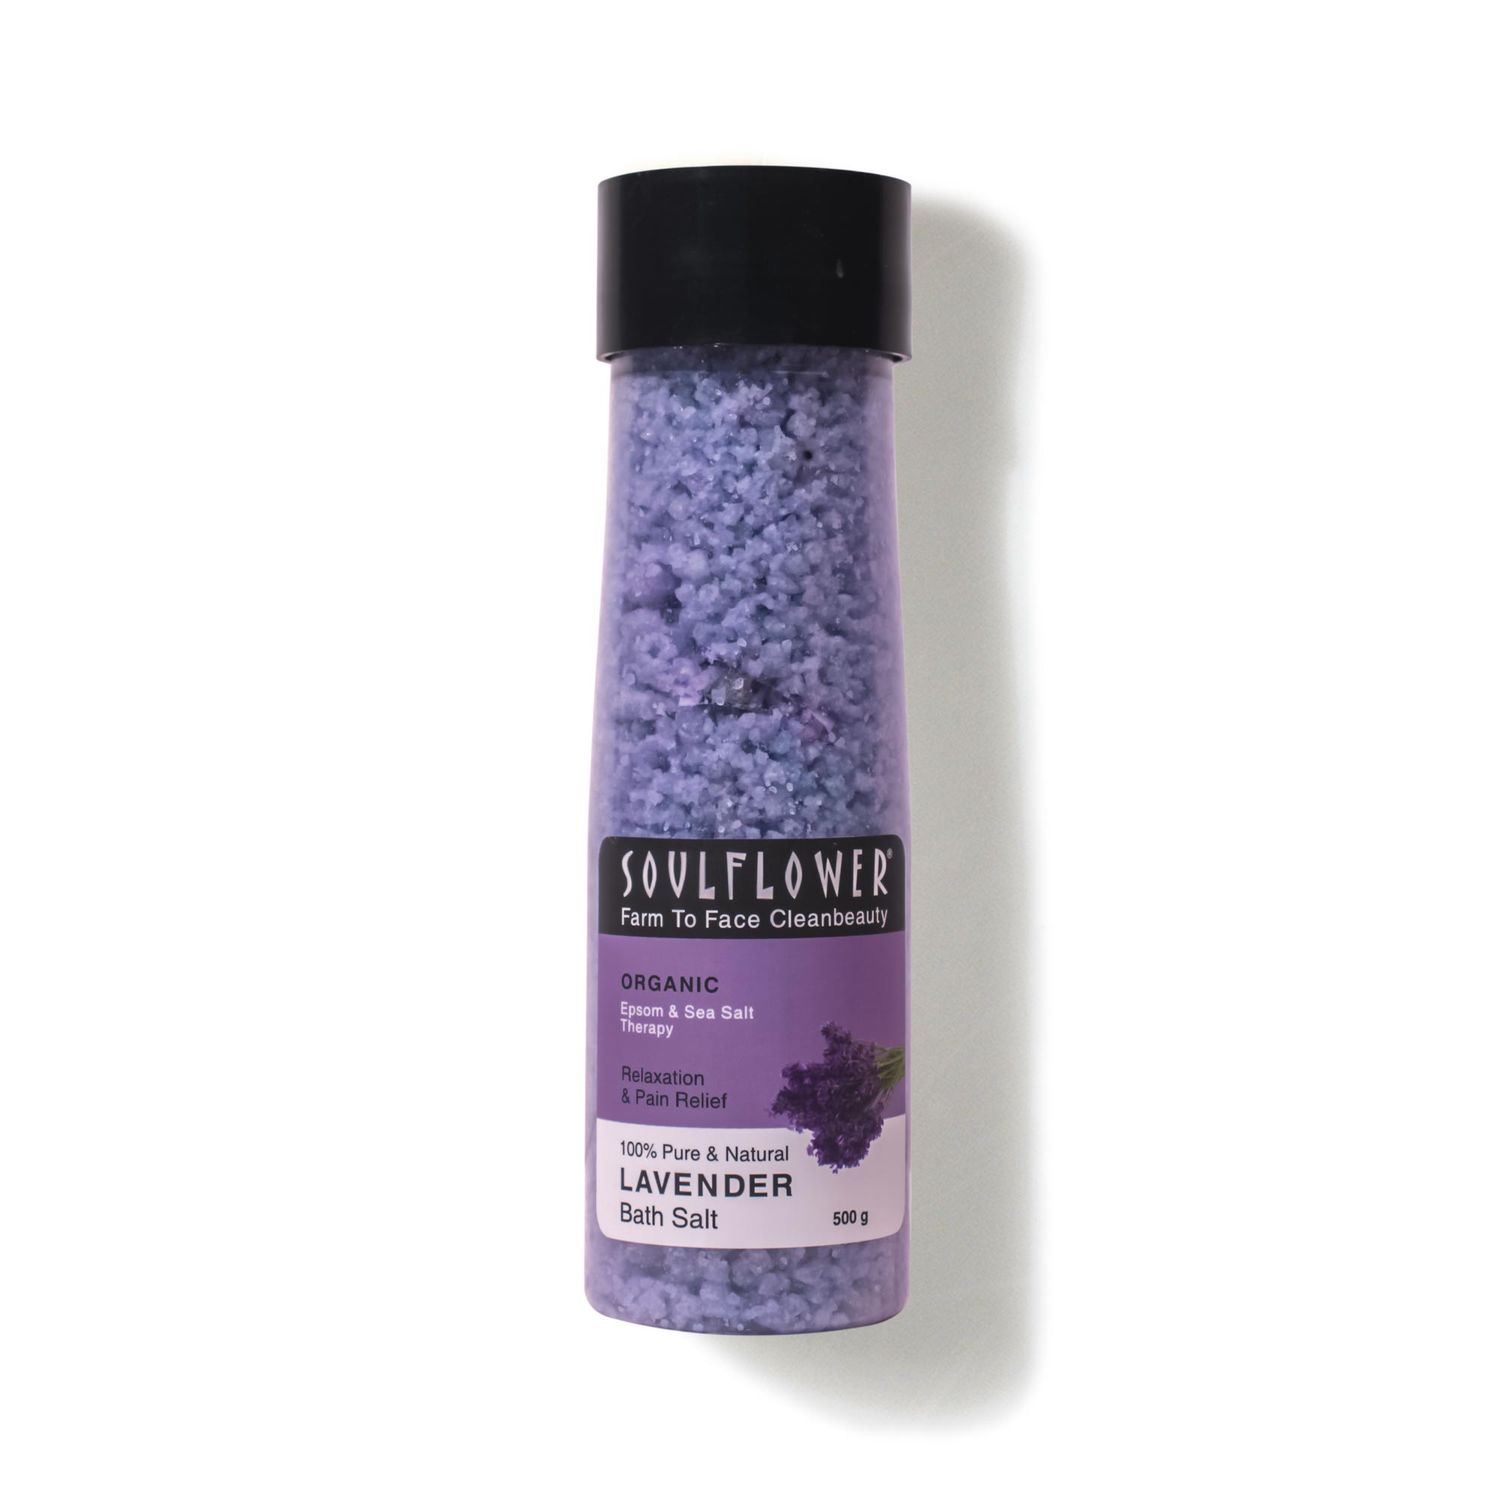 Buy Soulflower Lavender Bath Salt for natural detox and smooth, moisturized & nourished skin, 100% Pure Natural Vegan Indian Formulation, Sea Salt Therapy, Floral, 500g - Purplle